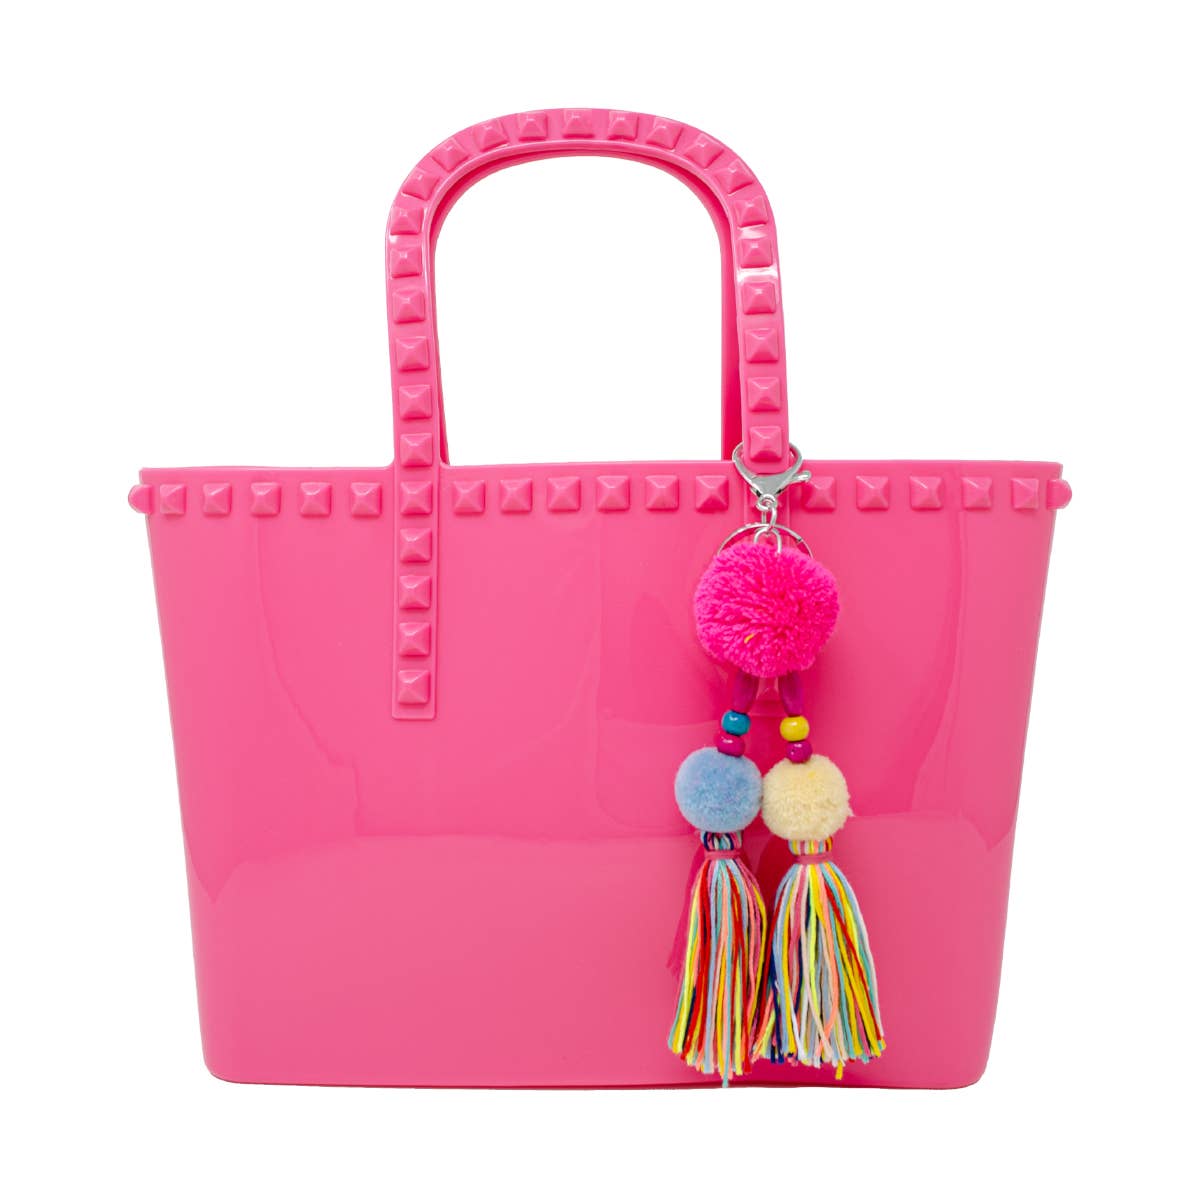 Jumbo Jelly Tote Bag pink